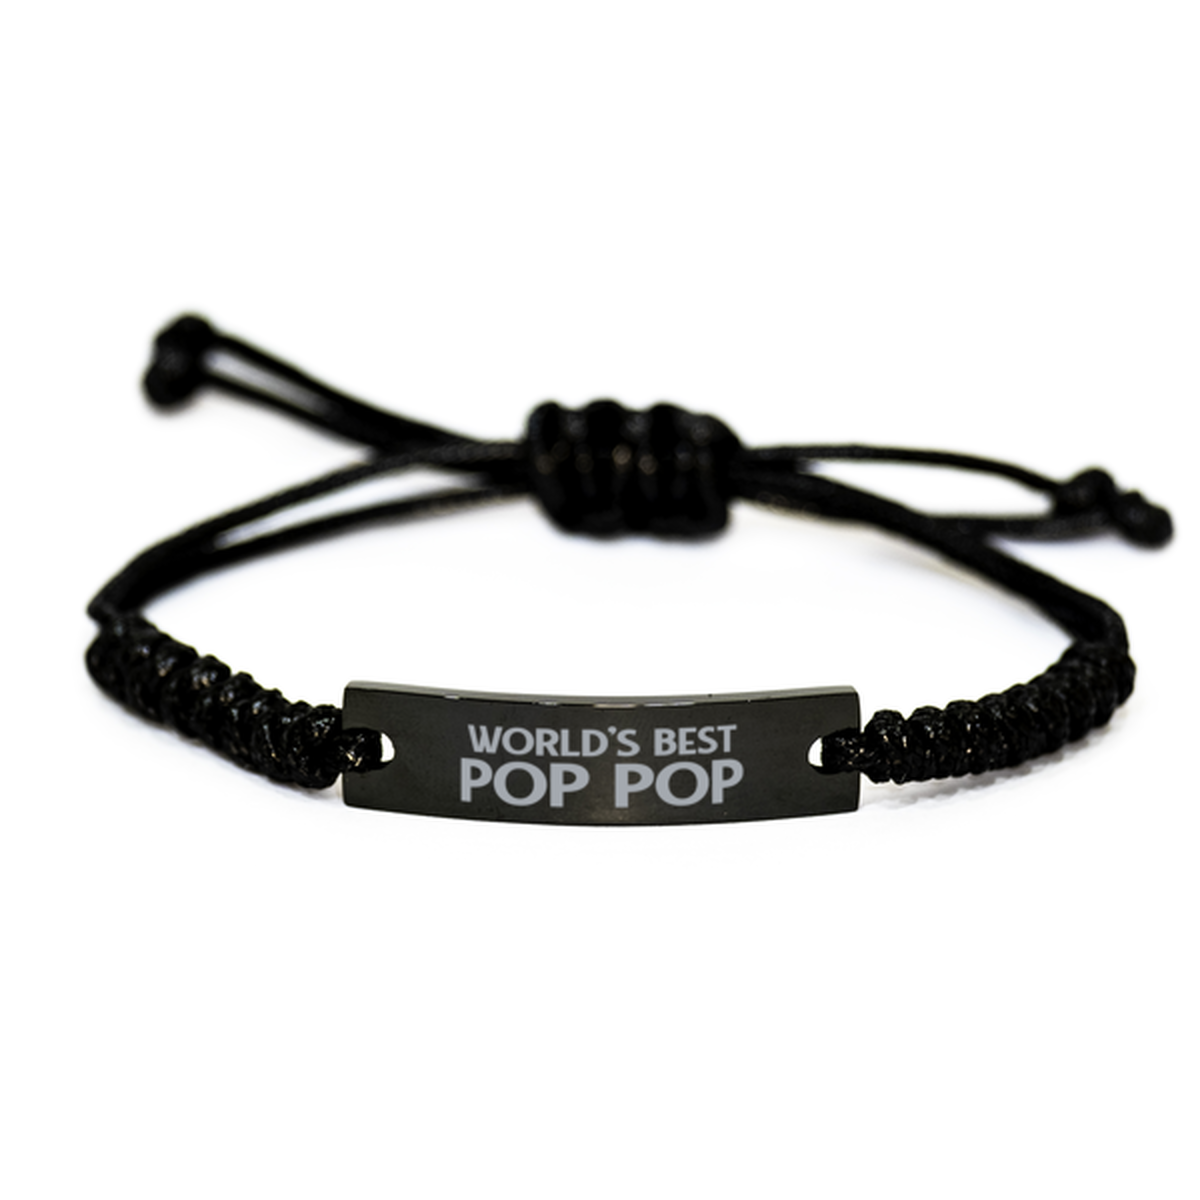 World's Best Pop Pop Gifts, Funny Engraved Rope Bracelet For Pop Pop, Birthday Family Gifts For Men